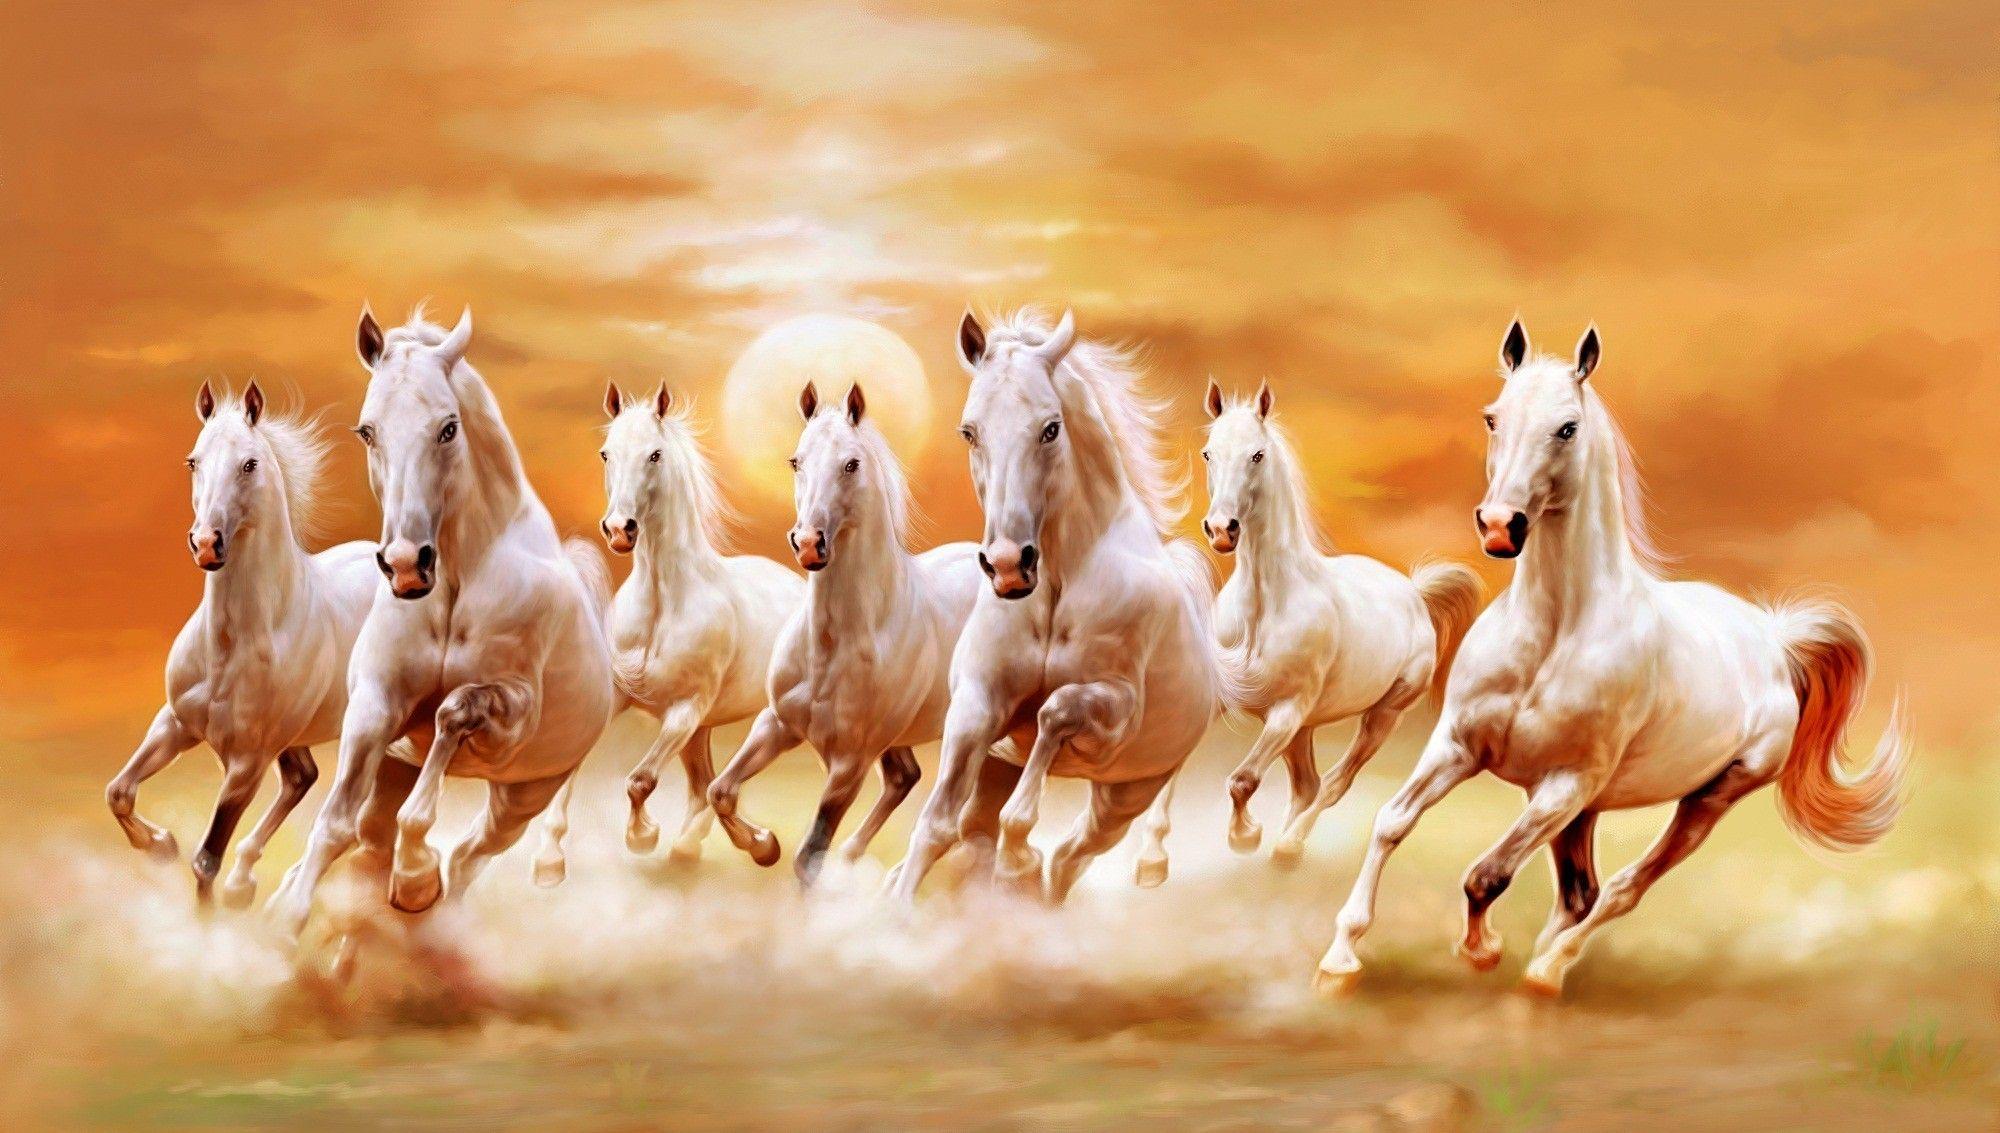 Running Horses With Frame  1820x1220 Wallpaper  teahubio